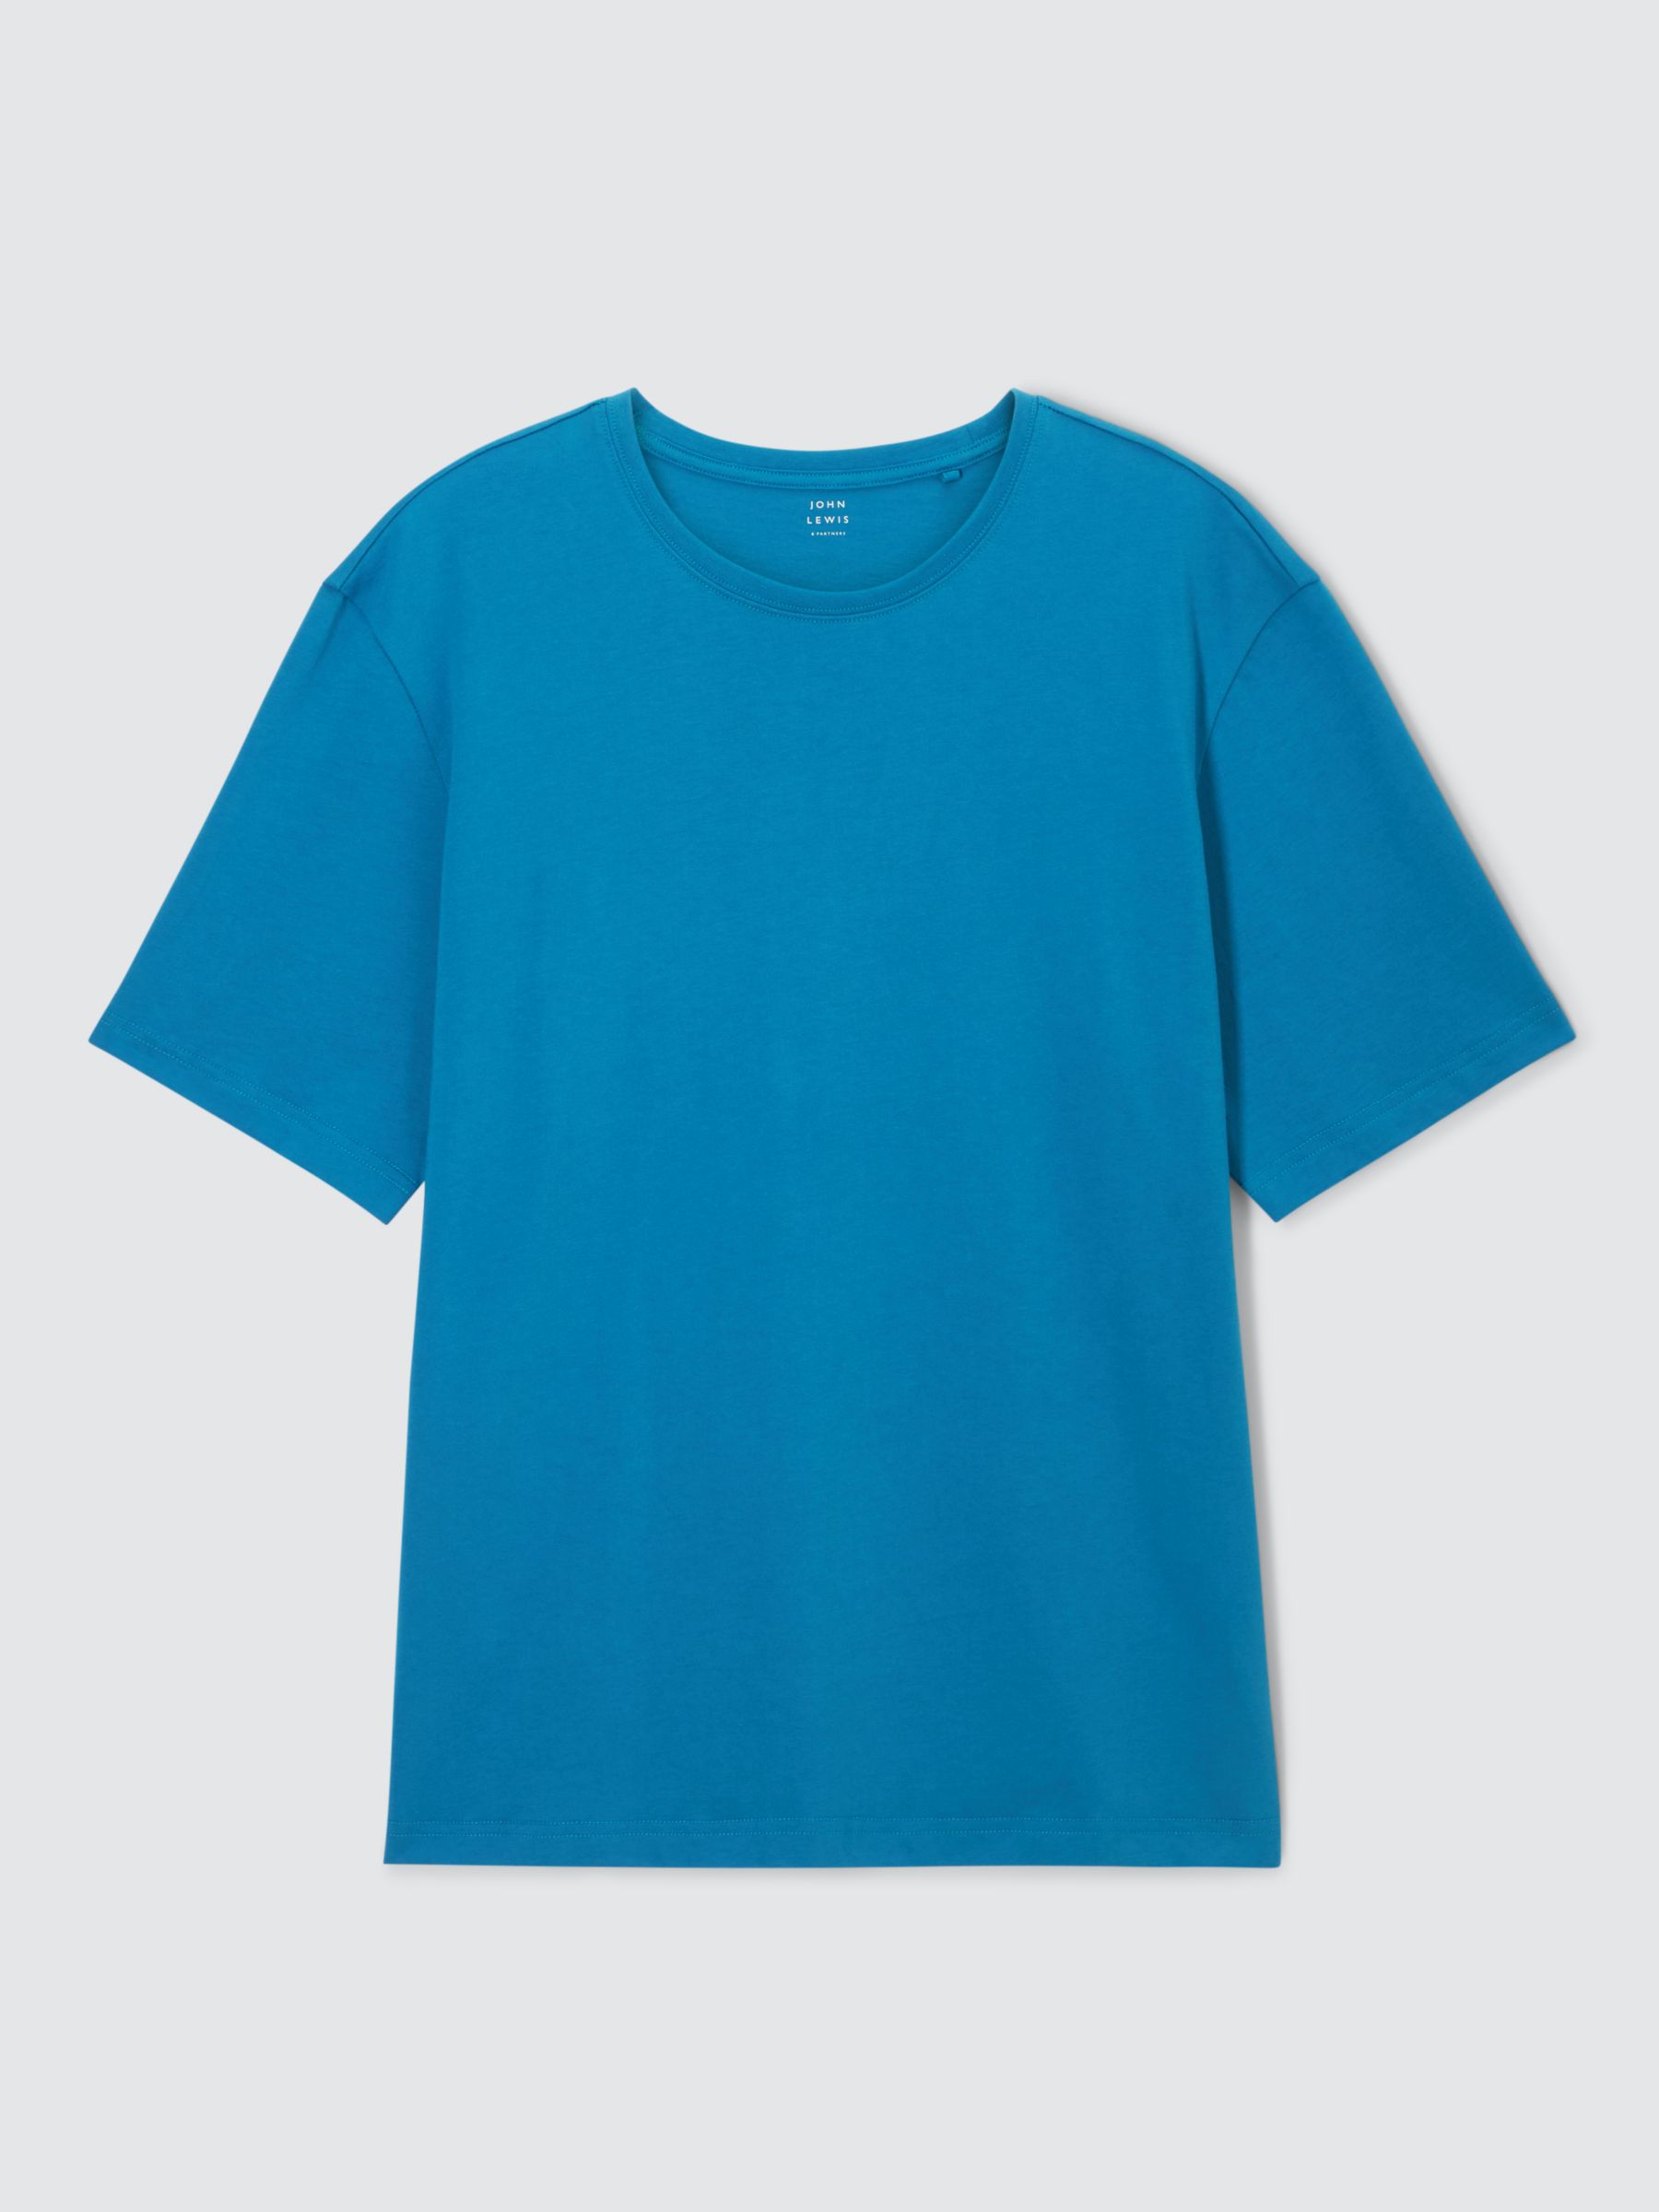 Buy John Lewis Short Sleeve Crew Neck T-Shirt Online at johnlewis.com